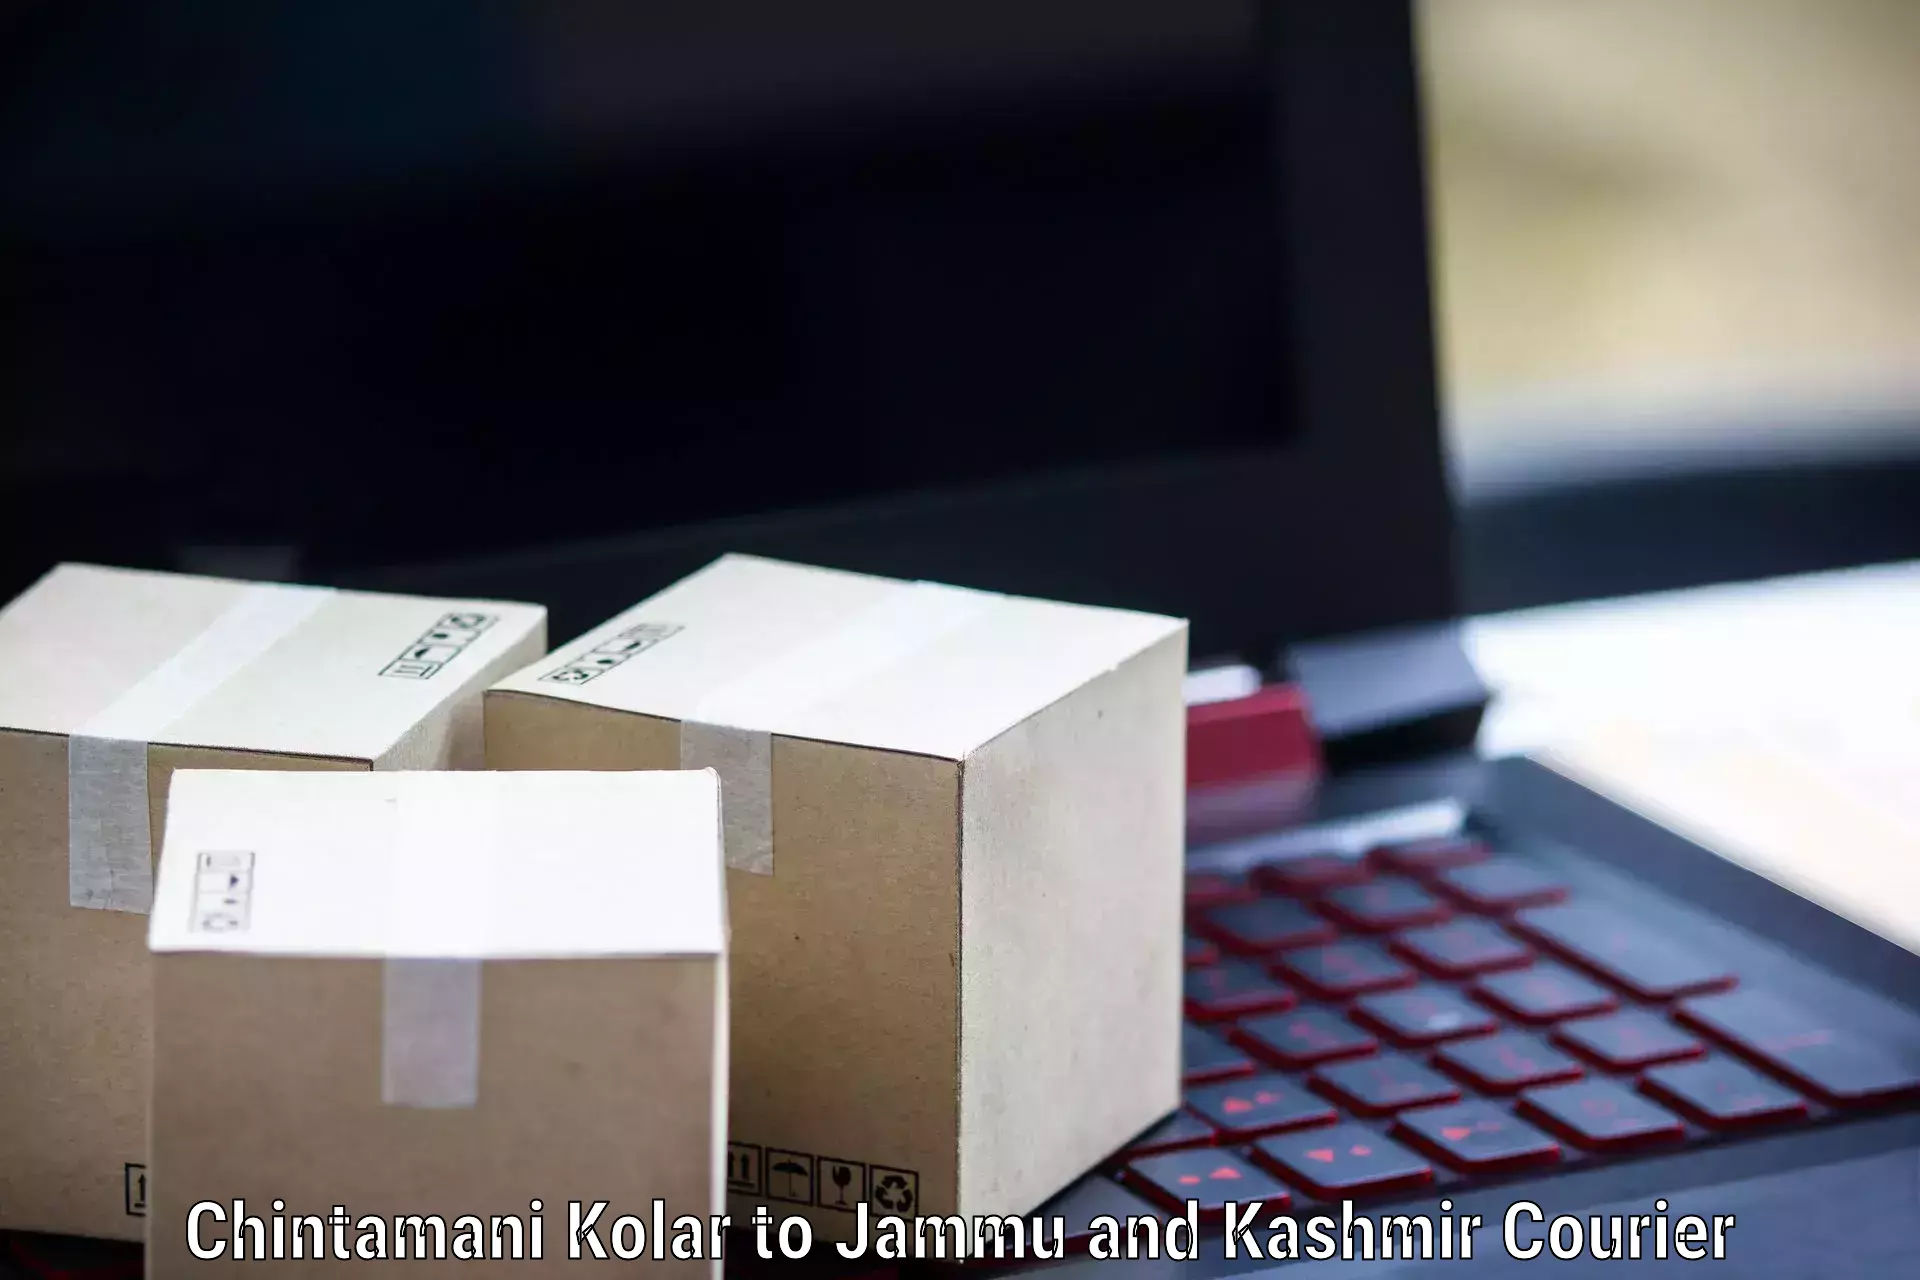 24-hour courier service Chintamani Kolar to Leh